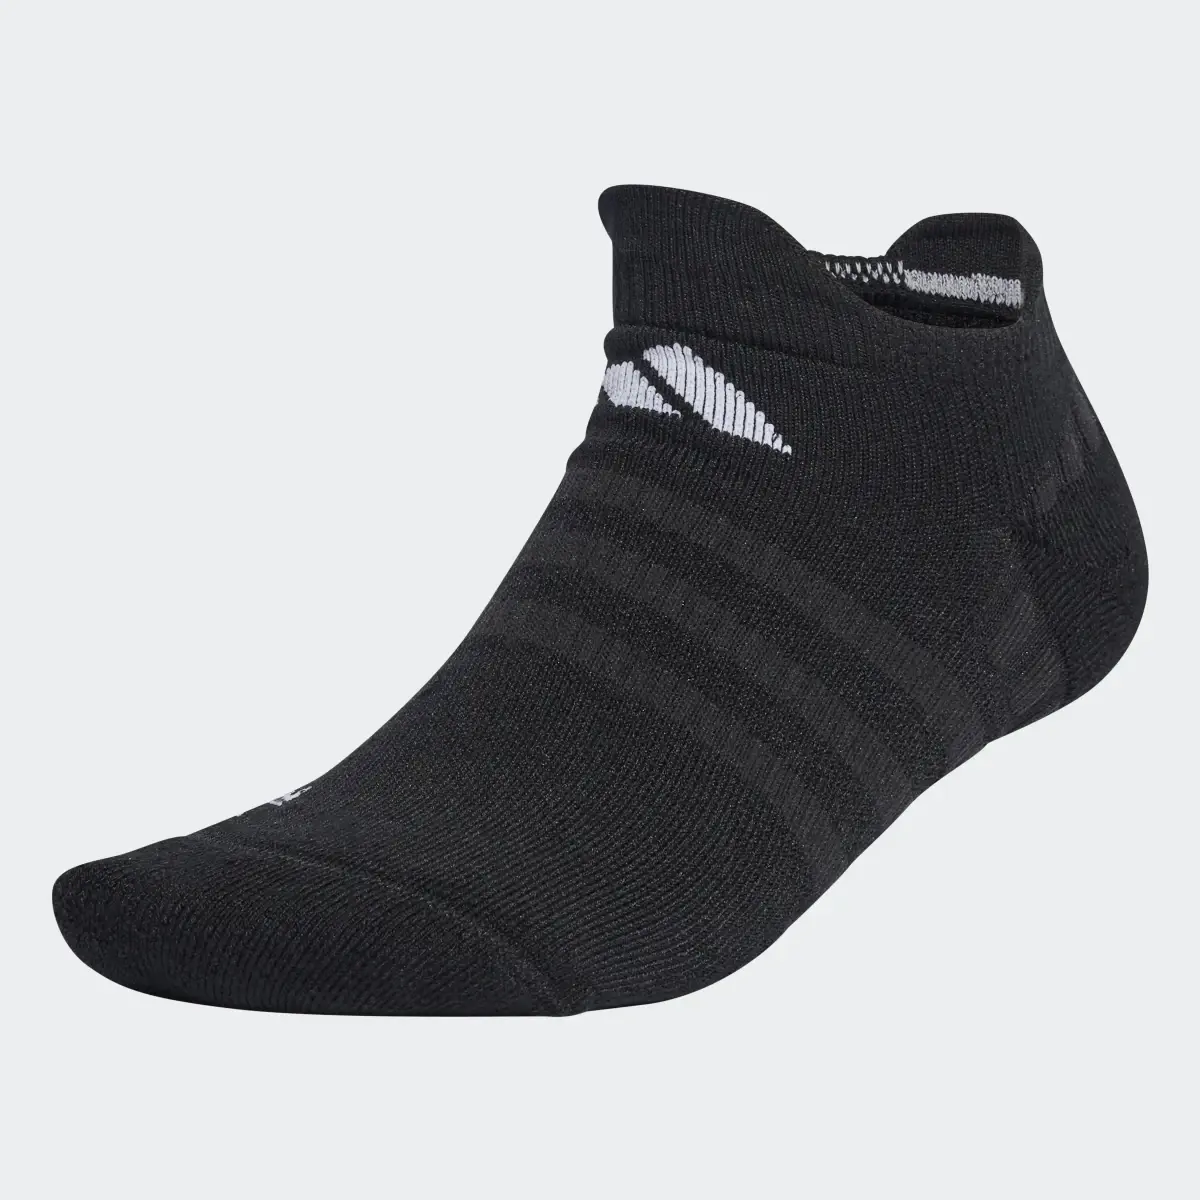 Adidas Tennis Low-Cut Cushioned Socks 1 Pair. 2